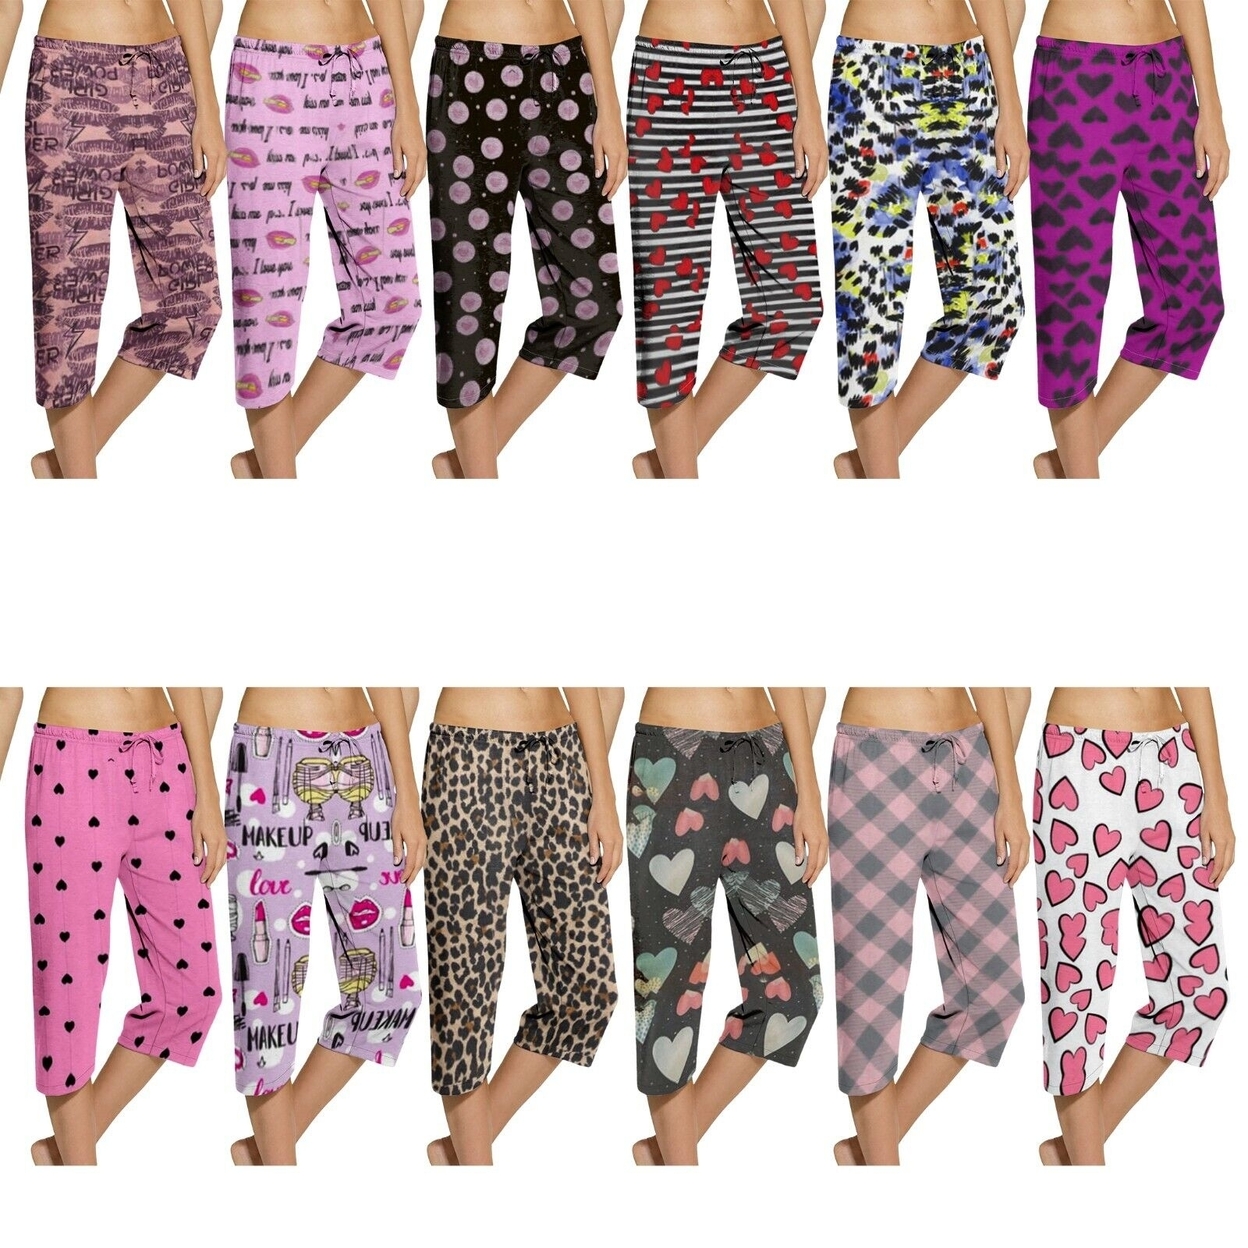 4-Pack: Women's Ultra-Soft Cozy Terry Knit Comfy Capri Sleepwear Pajama Bottoms - X-large, Love